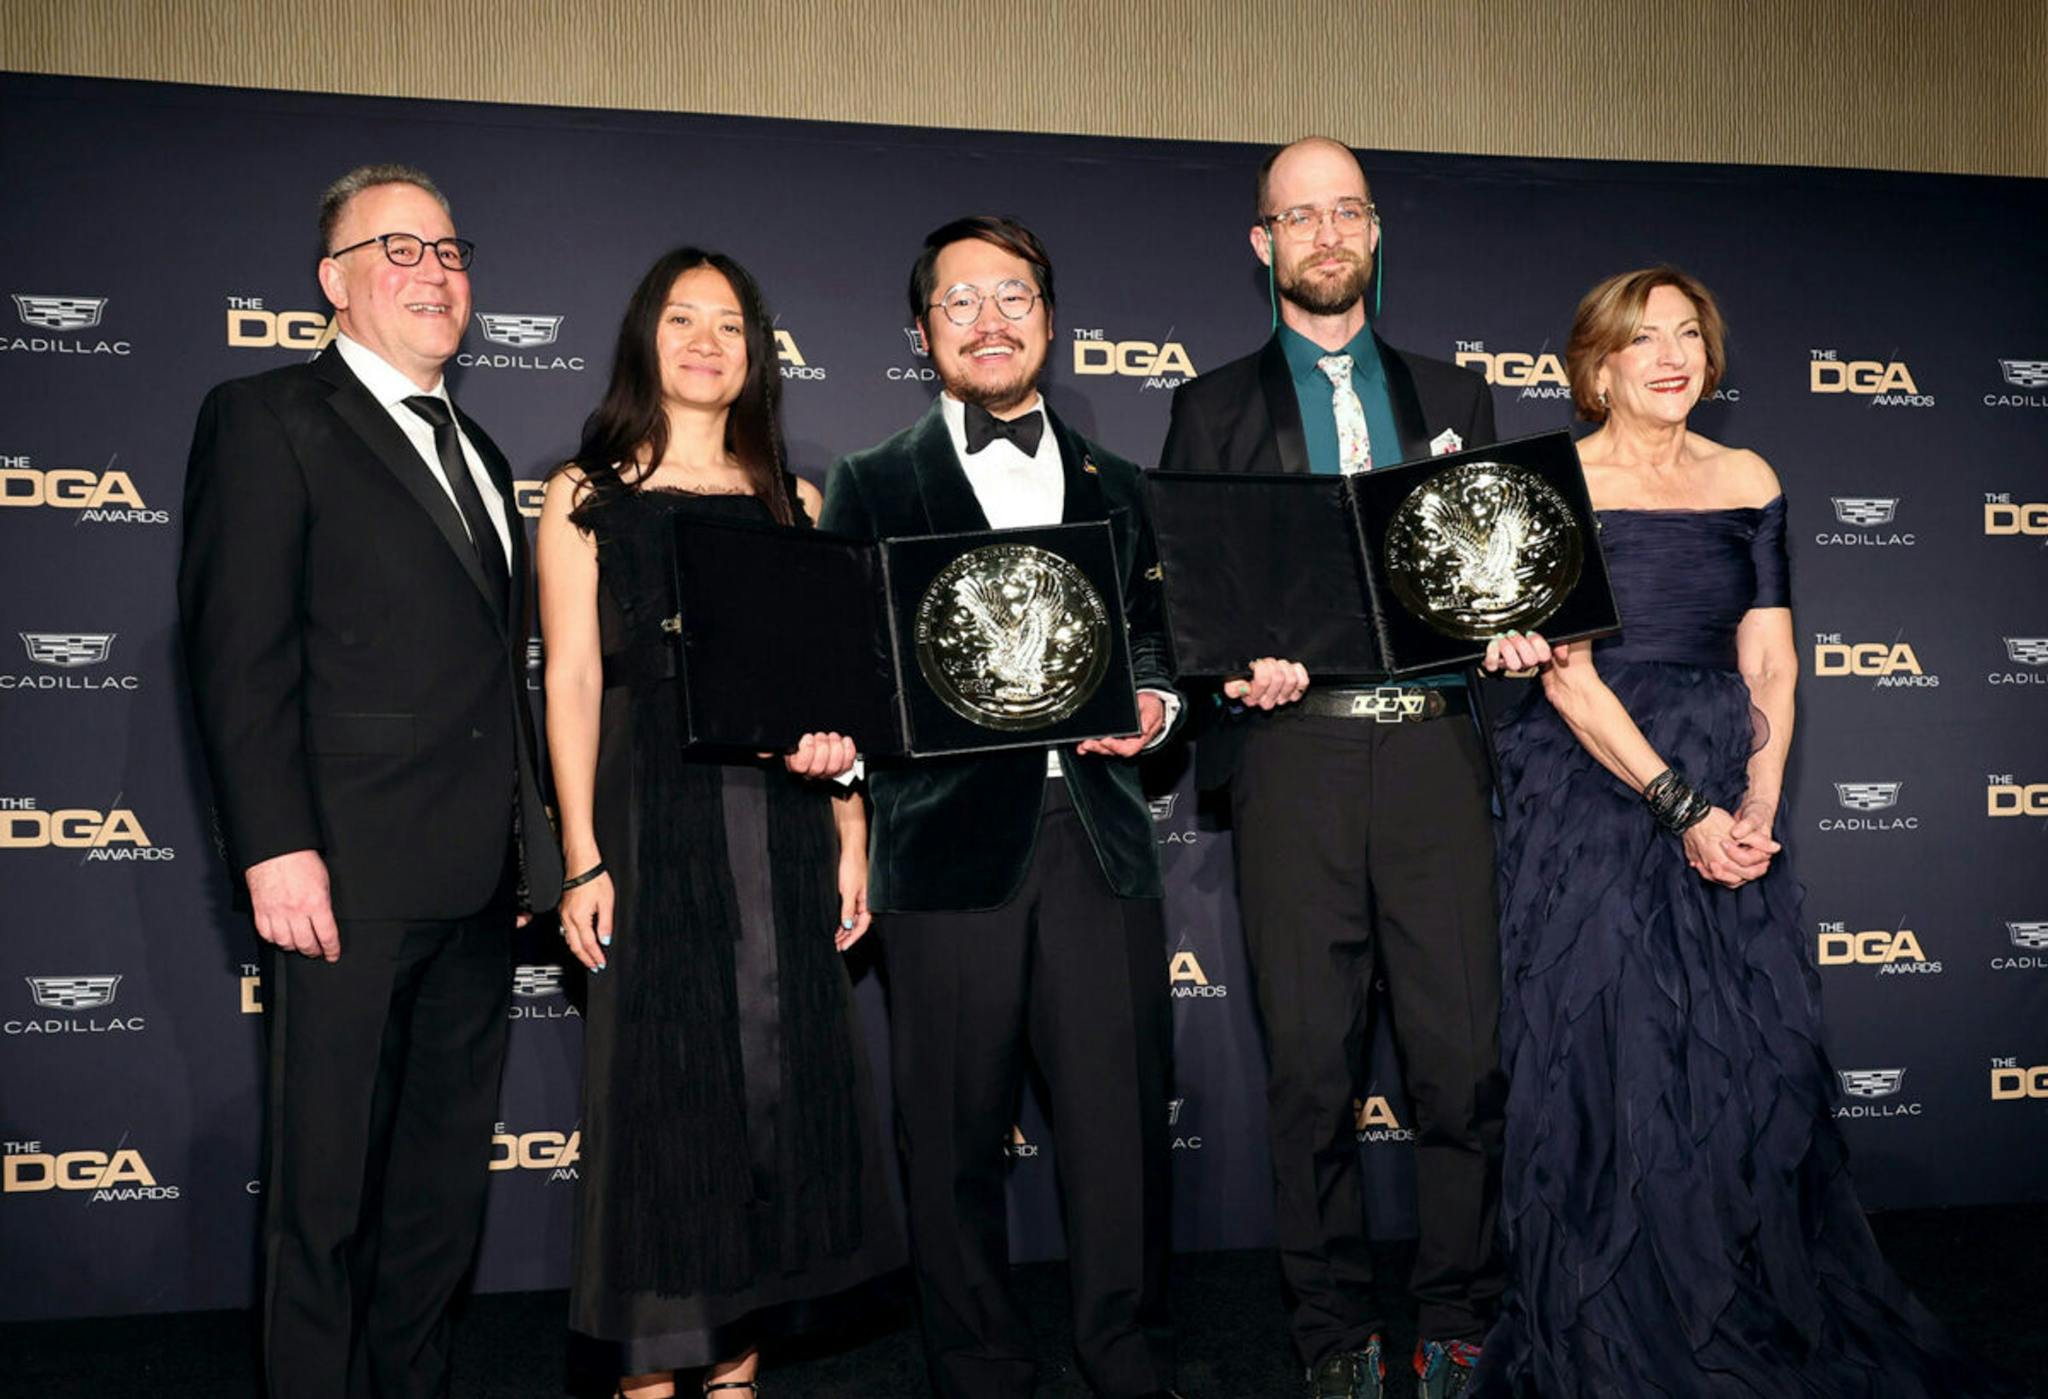 Daniel Kwan, Daniel Scheinert y la presidenta del DGA Lesli Linka Glatter tras la entrega de premios del síndicato